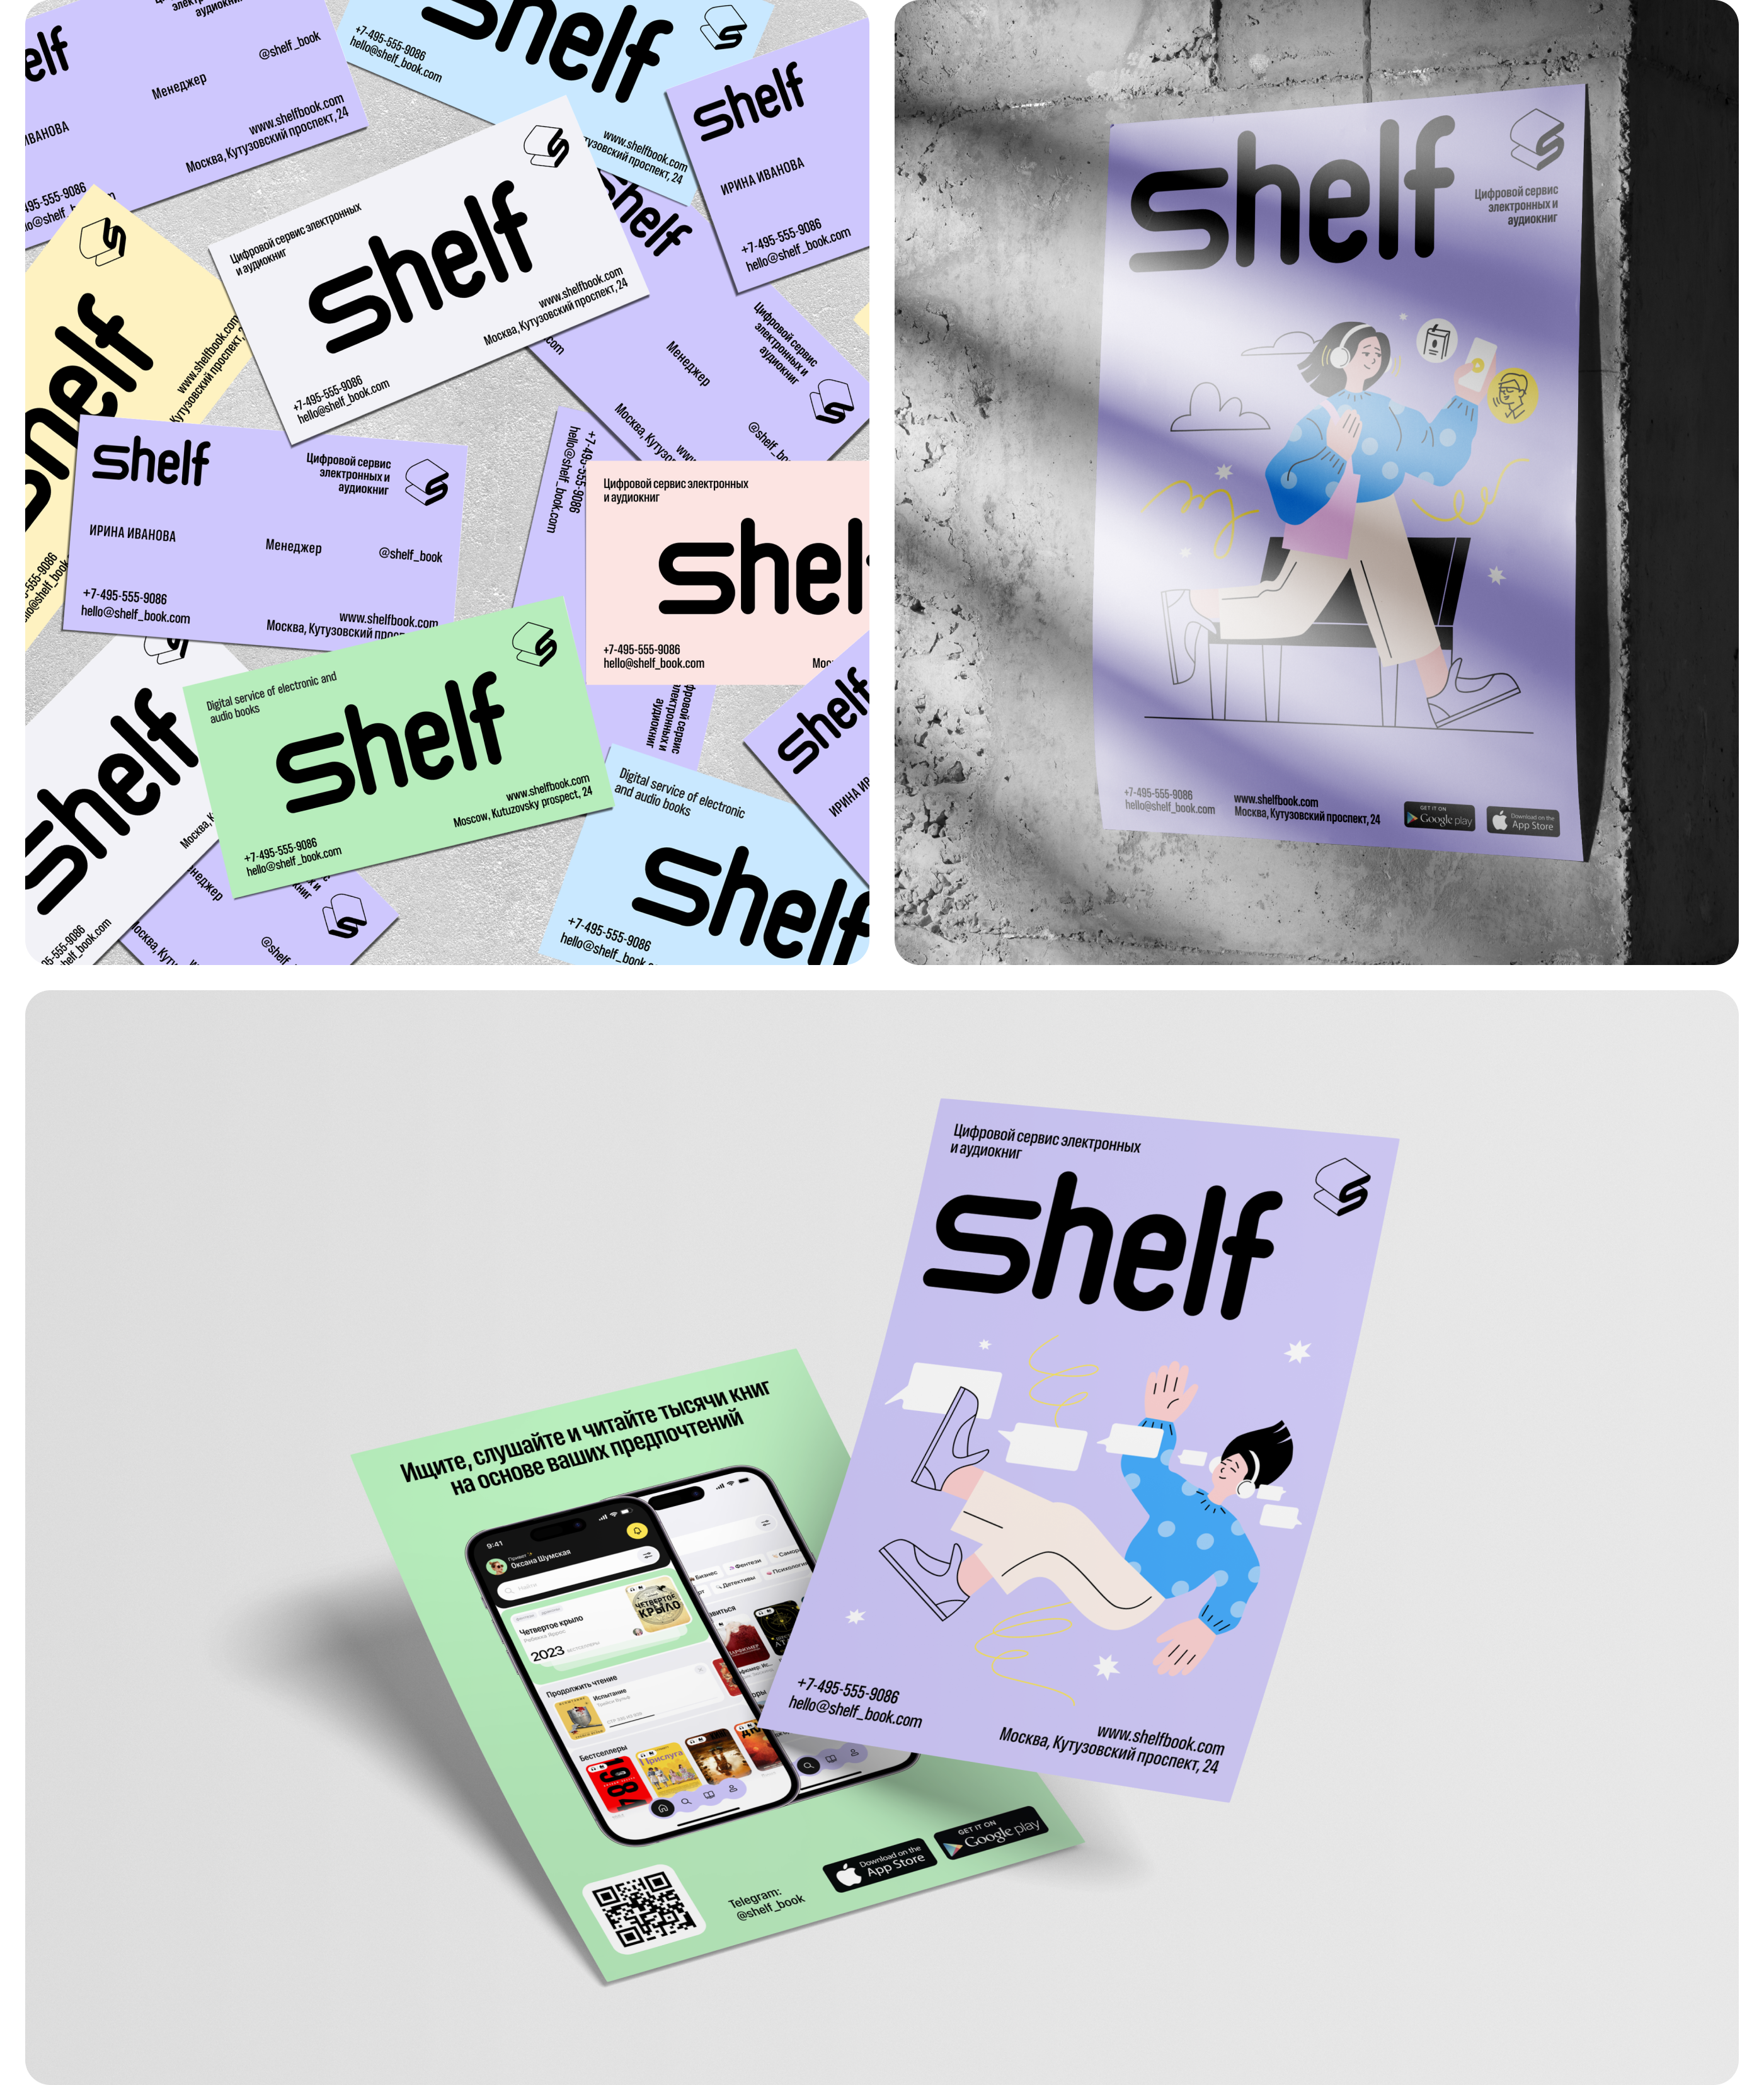 Shelf — Изображение №7 — Интерфейсы, Брендинг на Dprofile